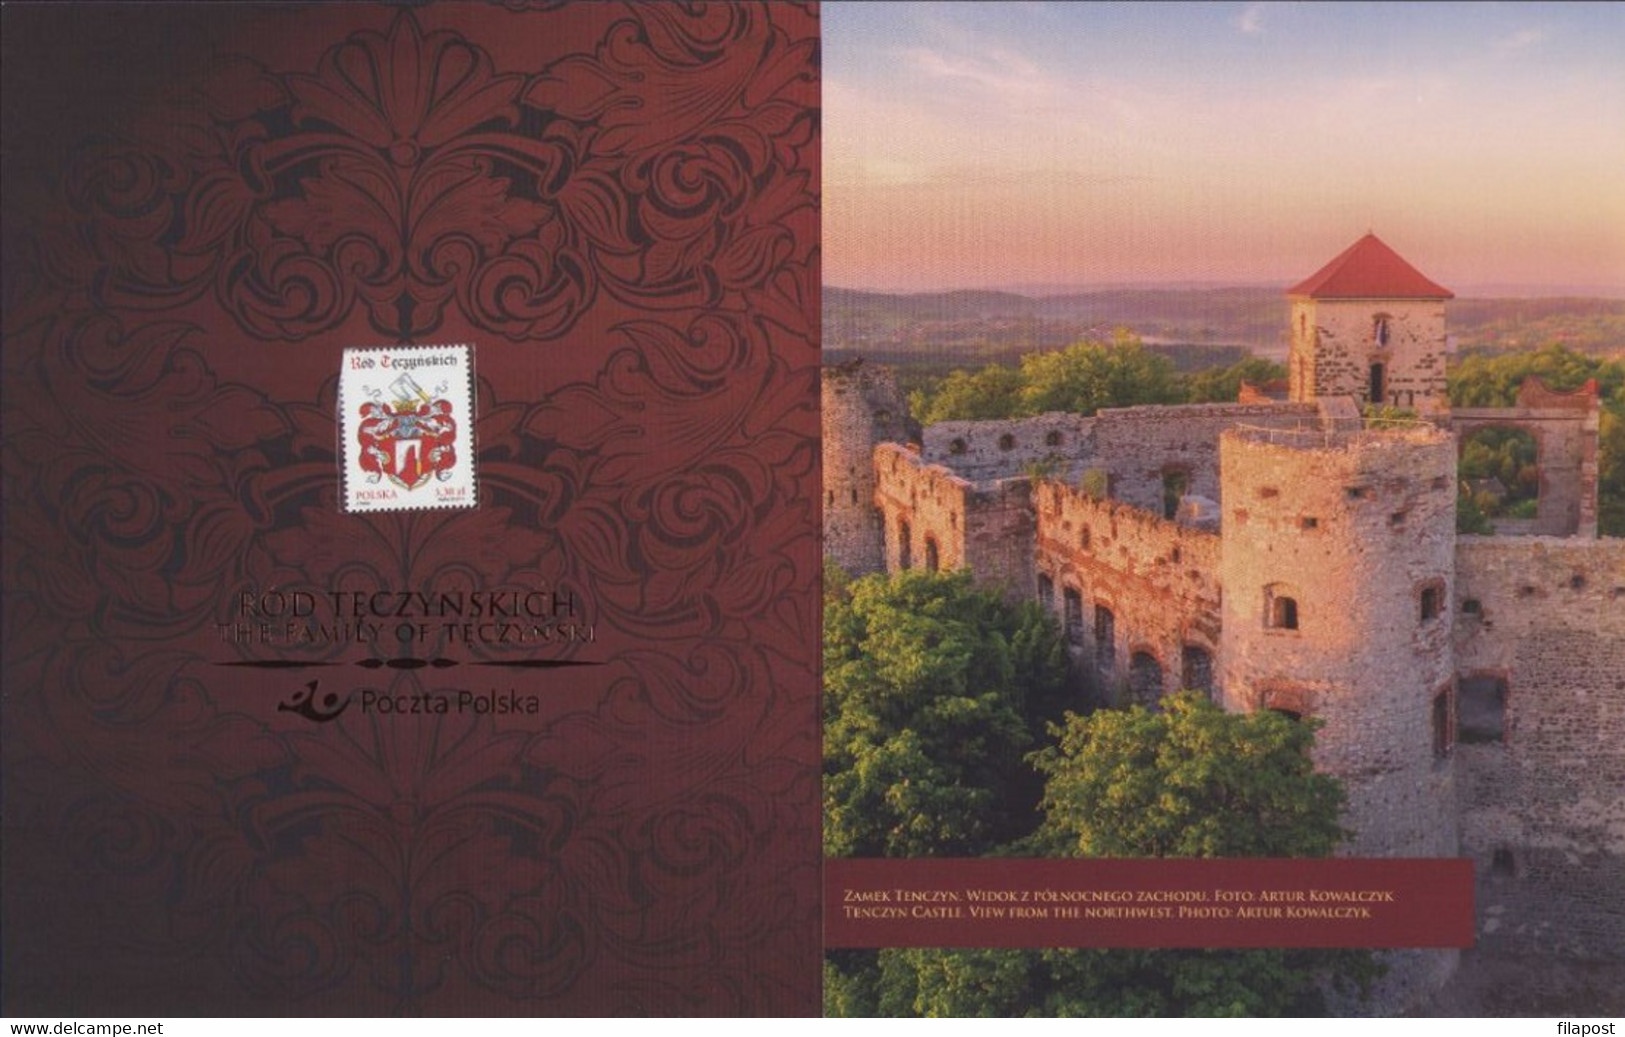 POLAND 2019 Booklet / The Family Of Teczynski, Kingdom Of Poland, Piast Dynasty, Jagiellon Dynasty / With Stamp MNH** - Booklets